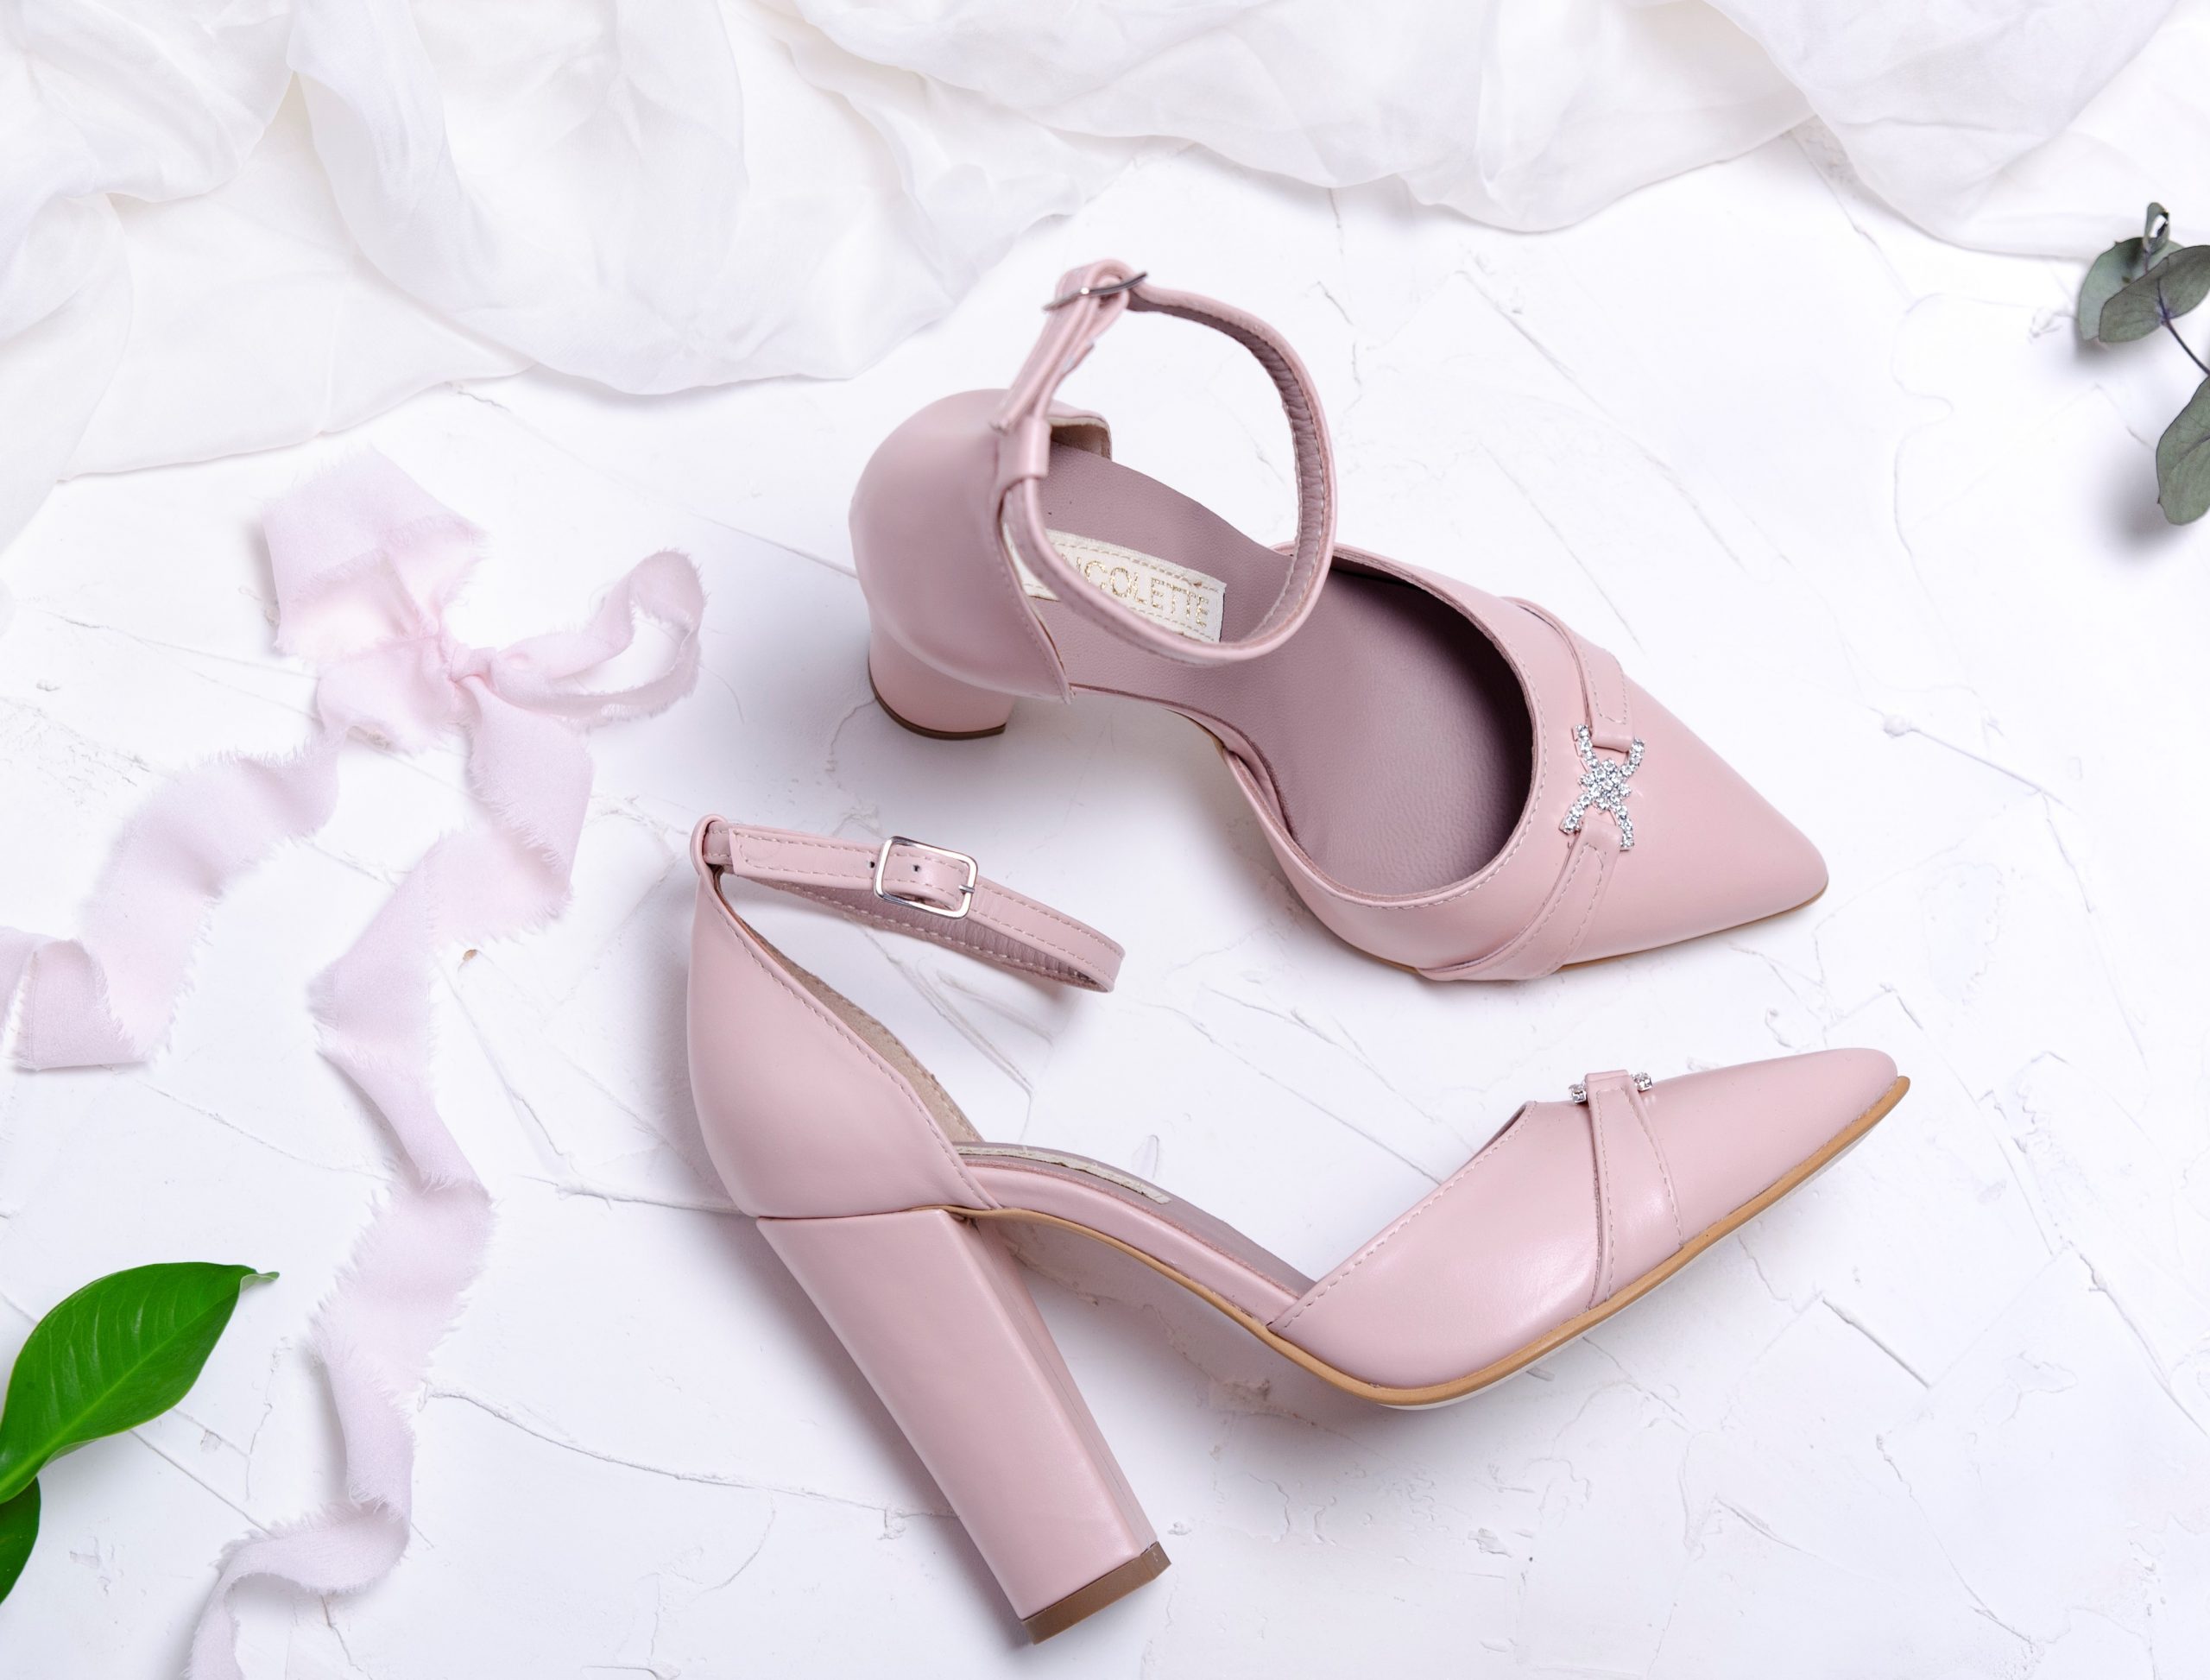 Accor George Bernard harassment Pantofi roz blush - pantofi piele naturala - Ancolette